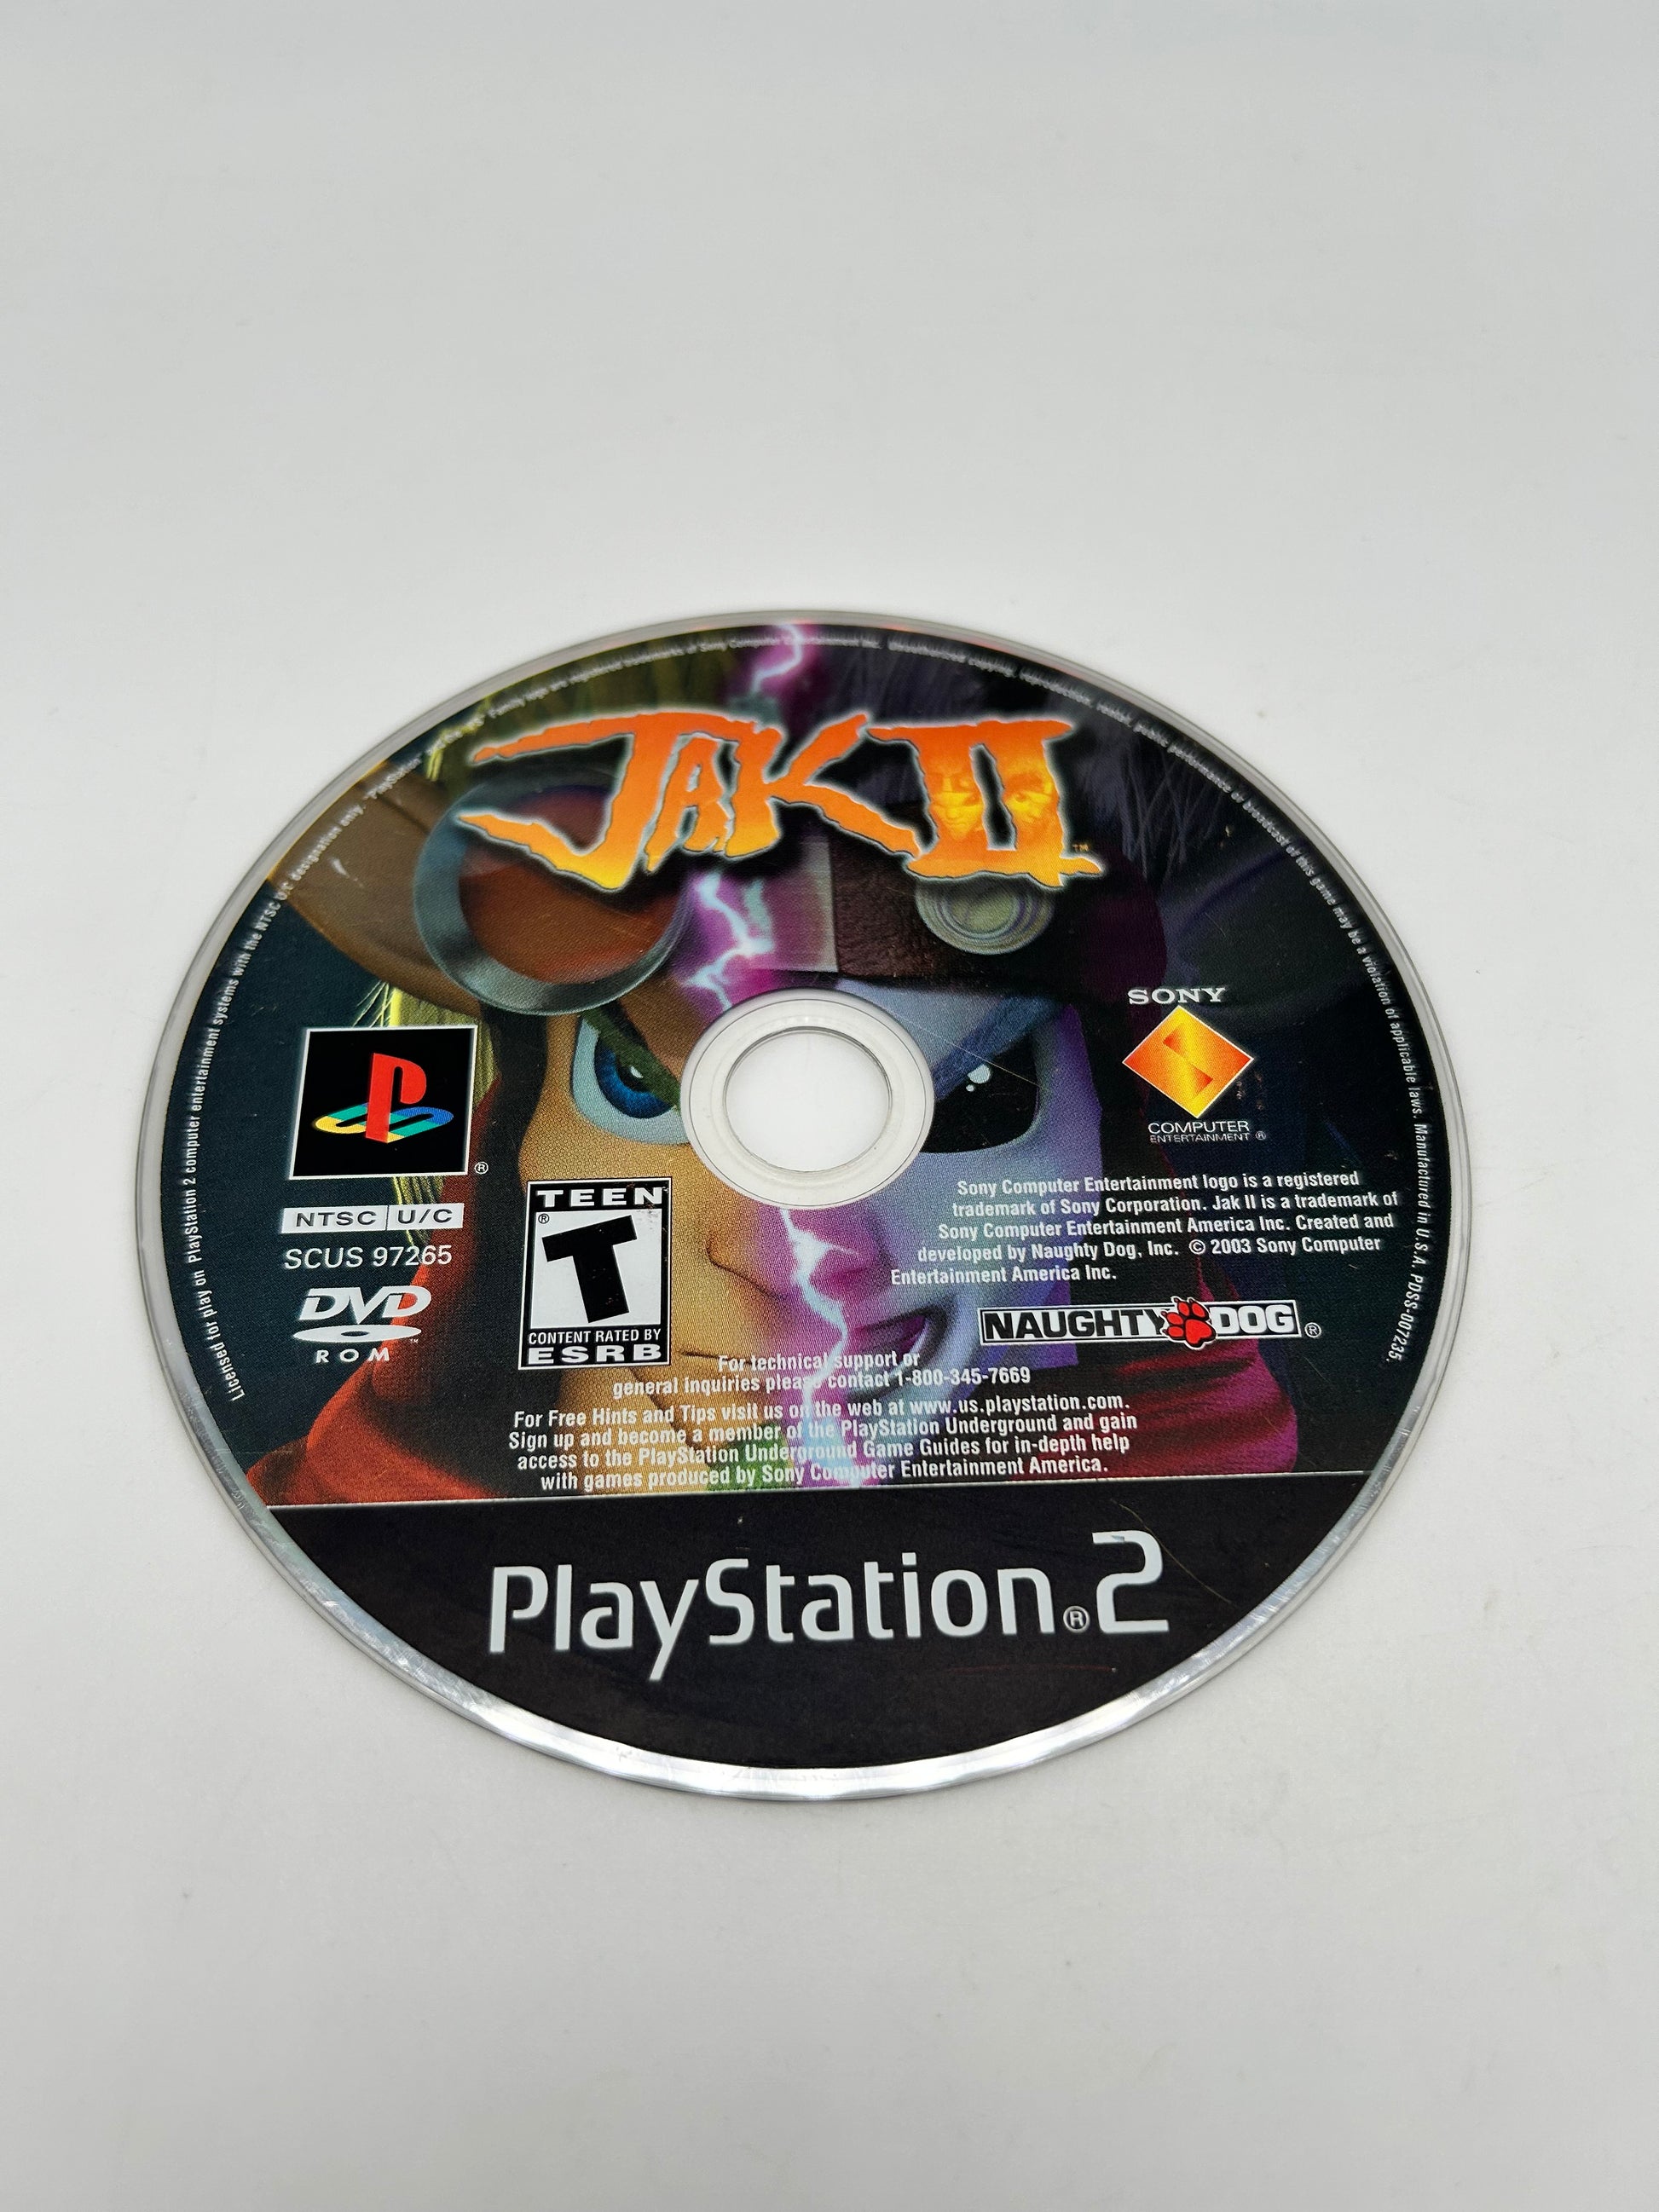 PiXEL-RETRO.COM : SONY PLAYSTATION 2 (PS2) GAME NTSC JAK II 2